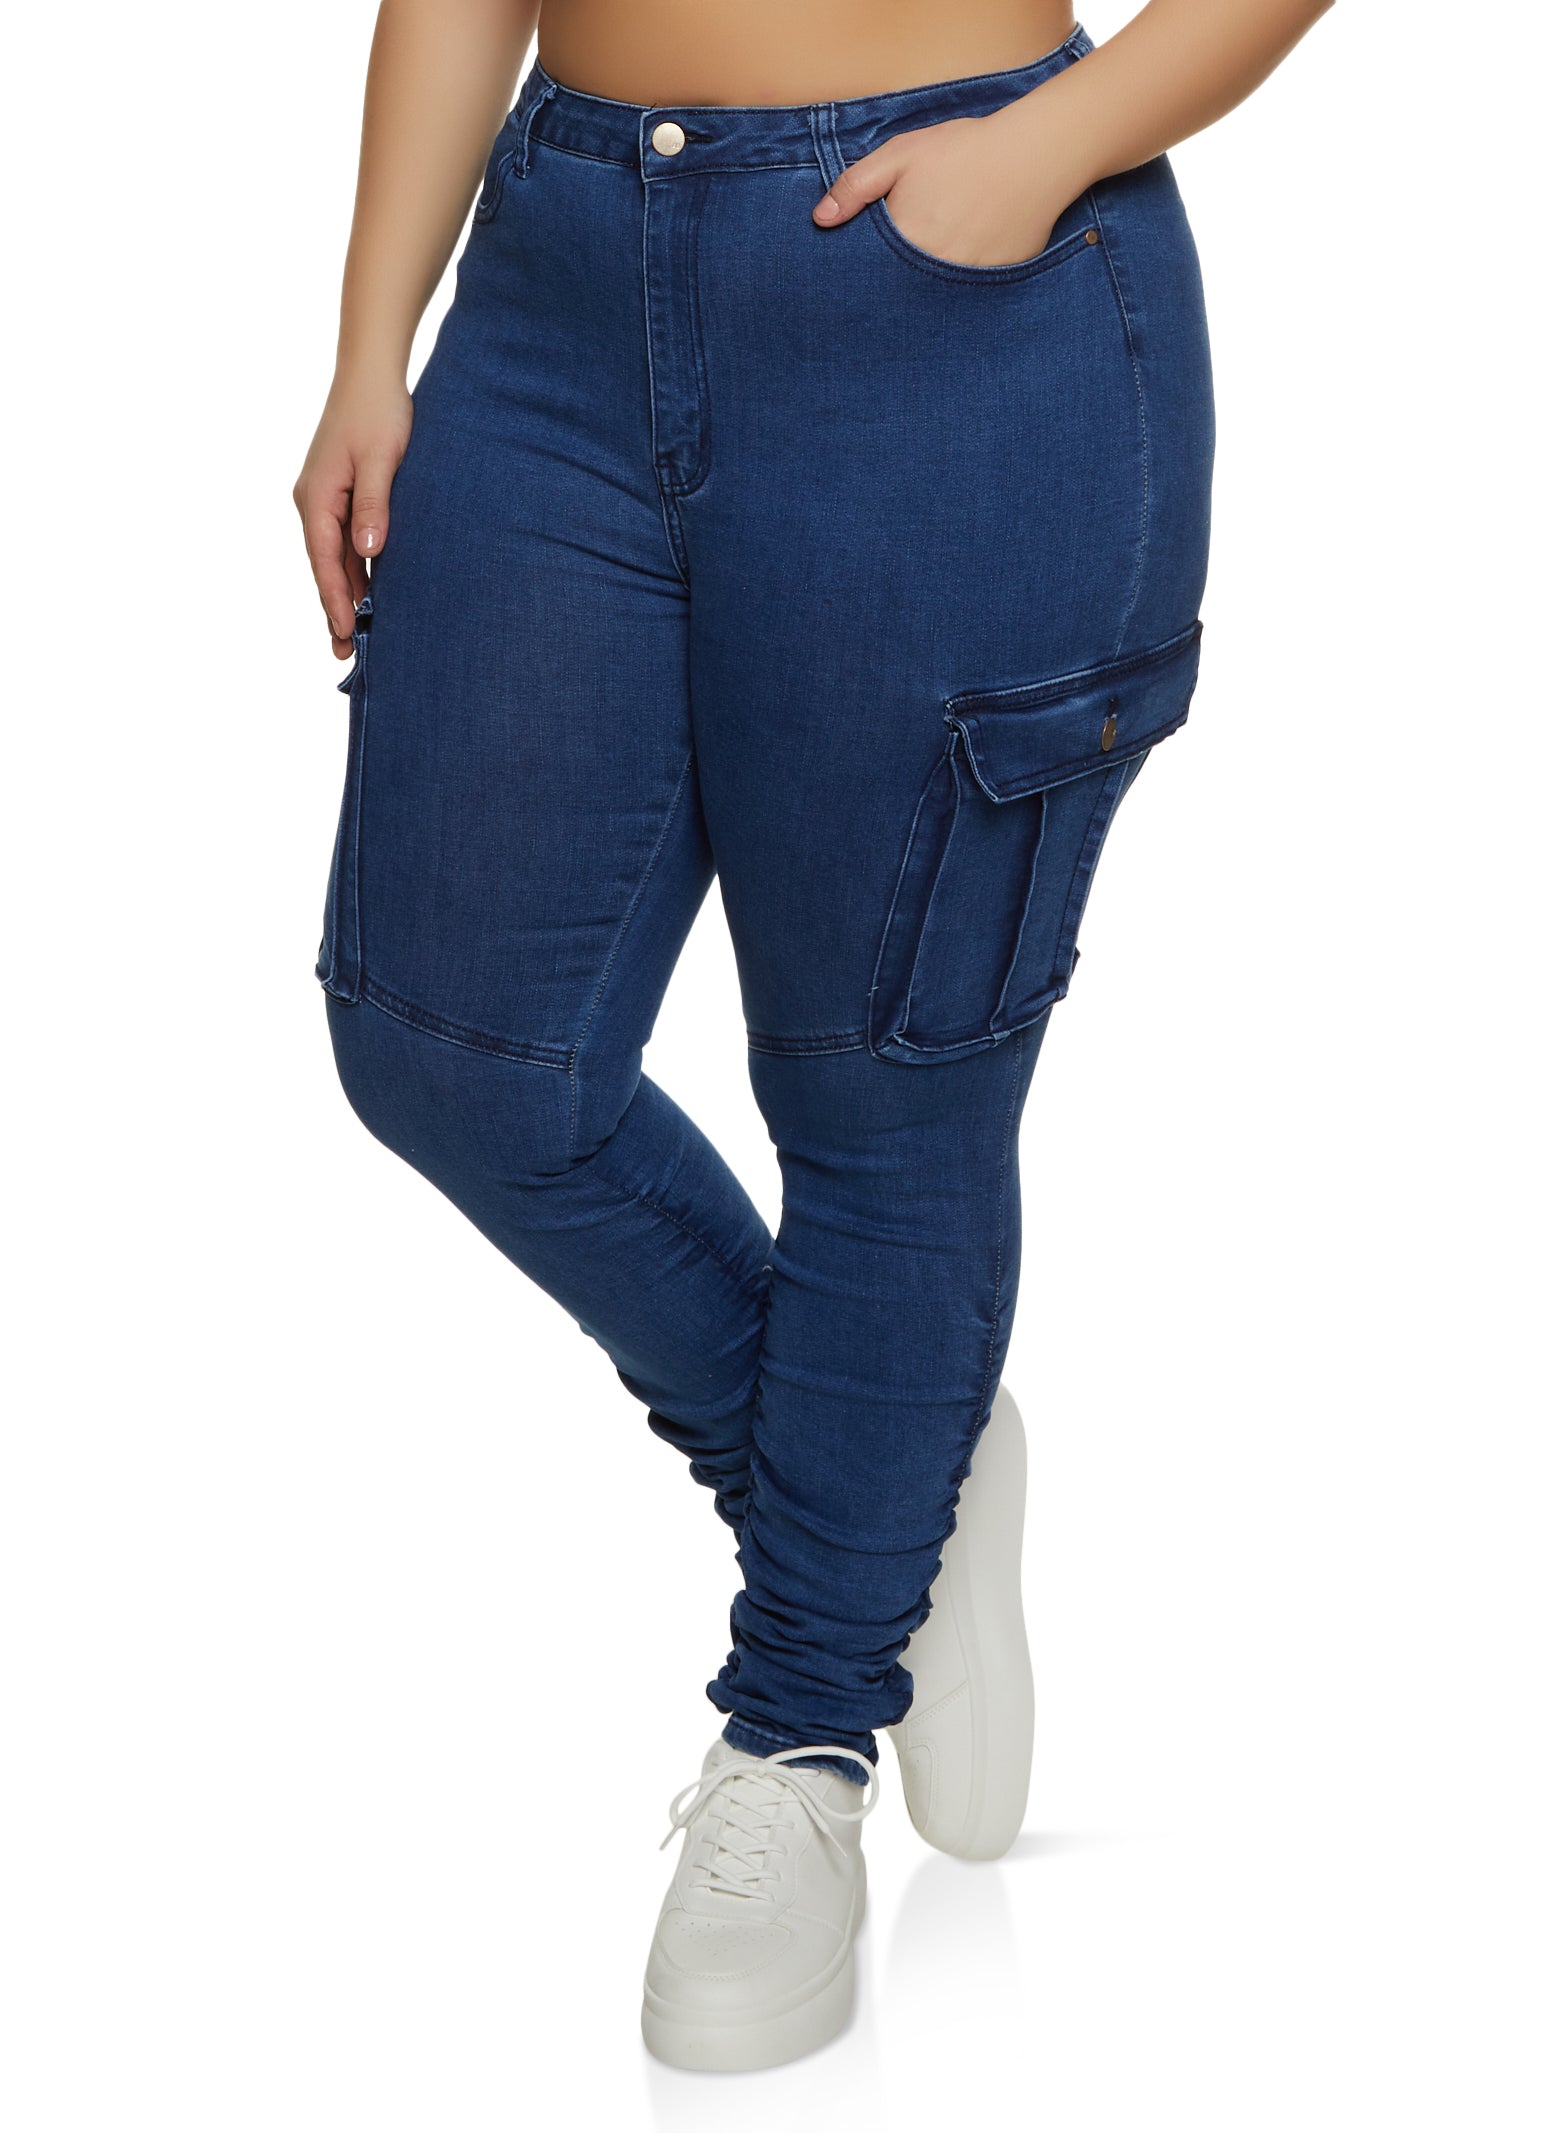 1826 Jeans Black Flap-Pocket Jeans - Plus by 1826 Jeans #zulily